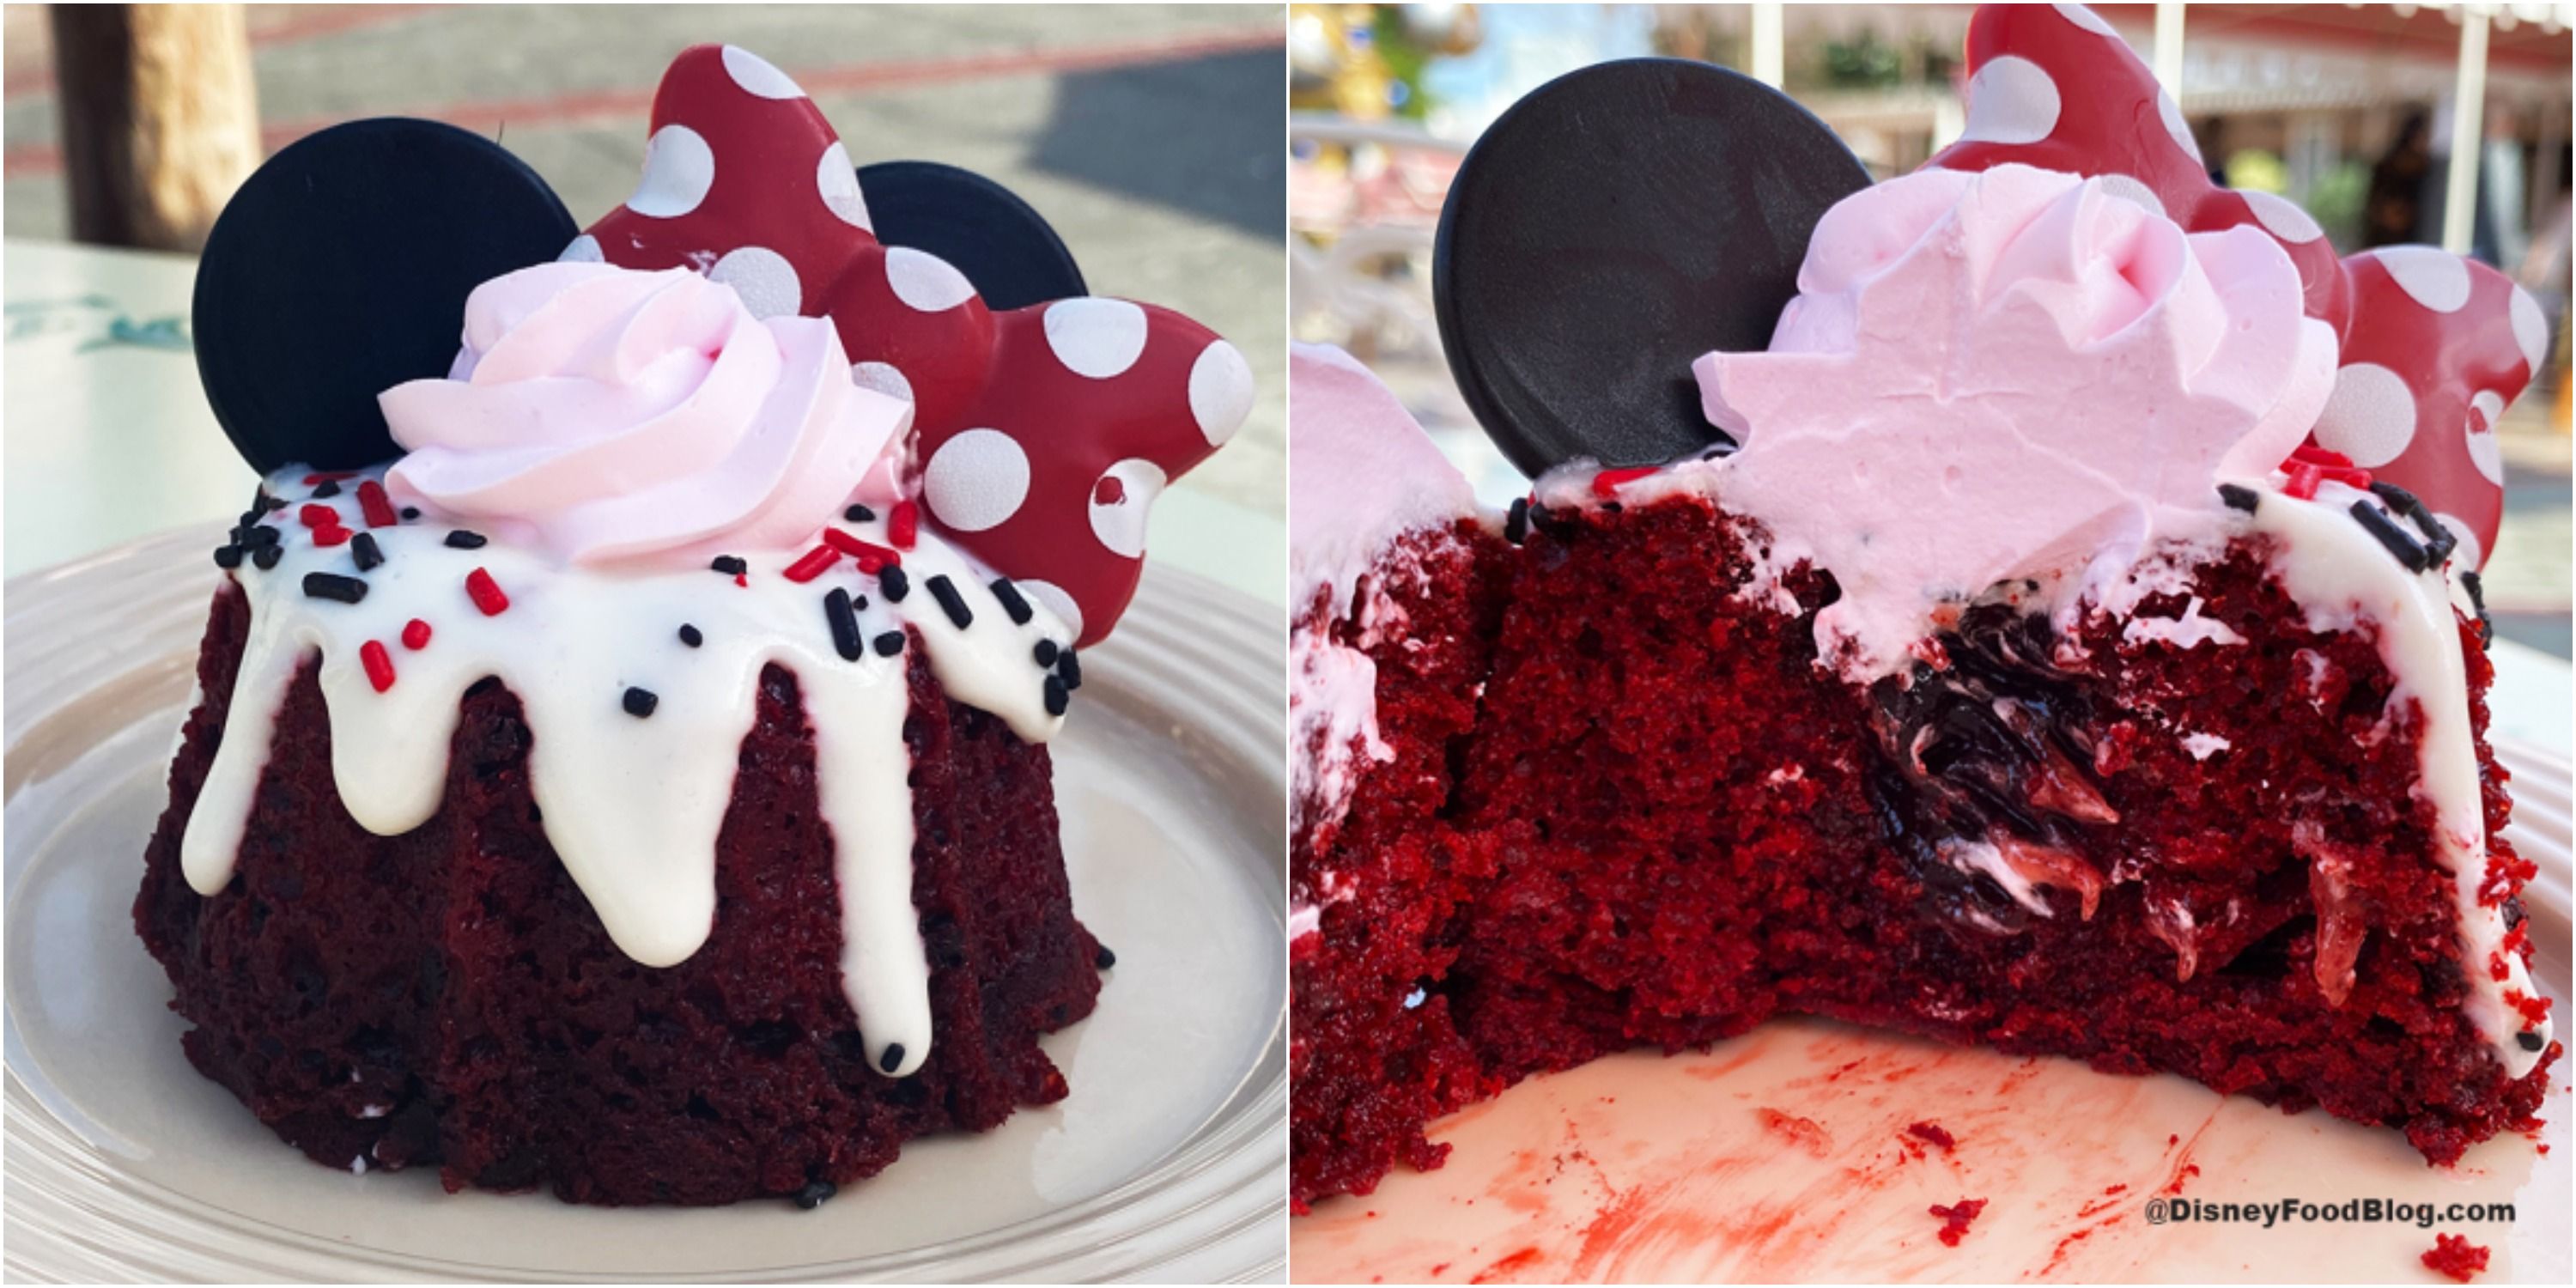 Disneyland cake - Decorated Cake by Bety'Sugarland by - CakesDecor